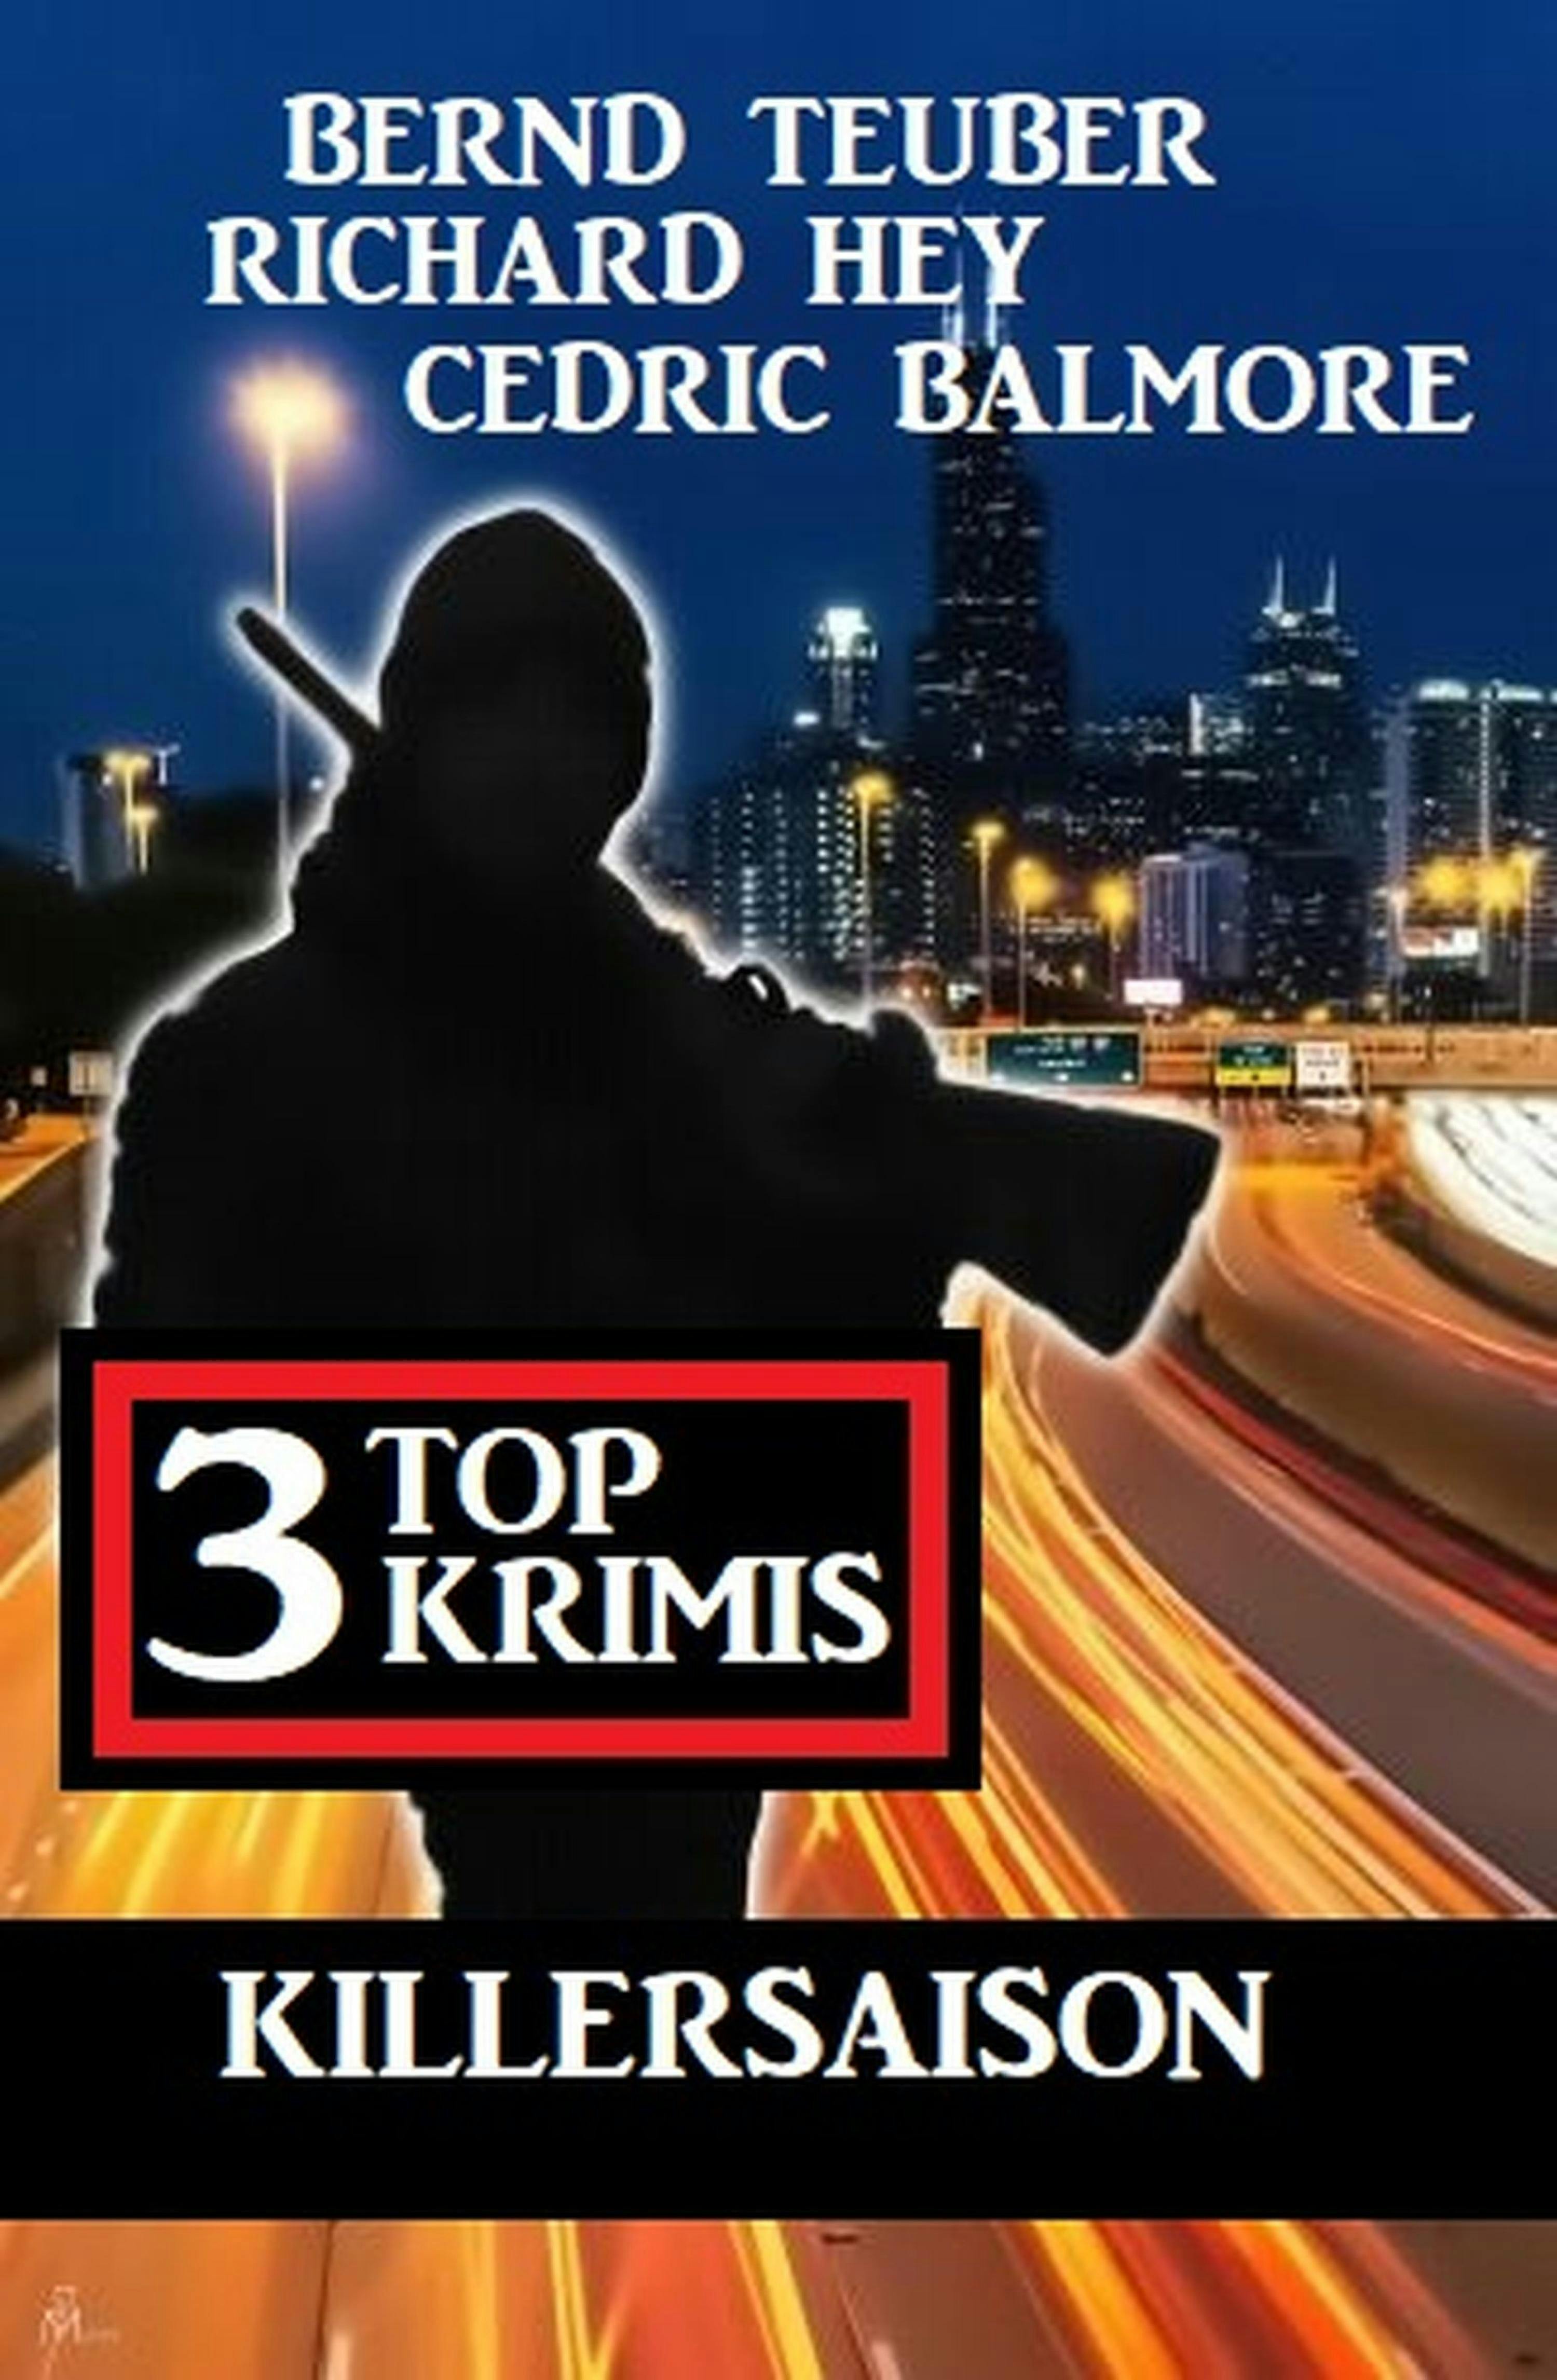 Killersaison: 3 Top Krimis - Richard Hey, Cedric Balmore, Bernd Teuber